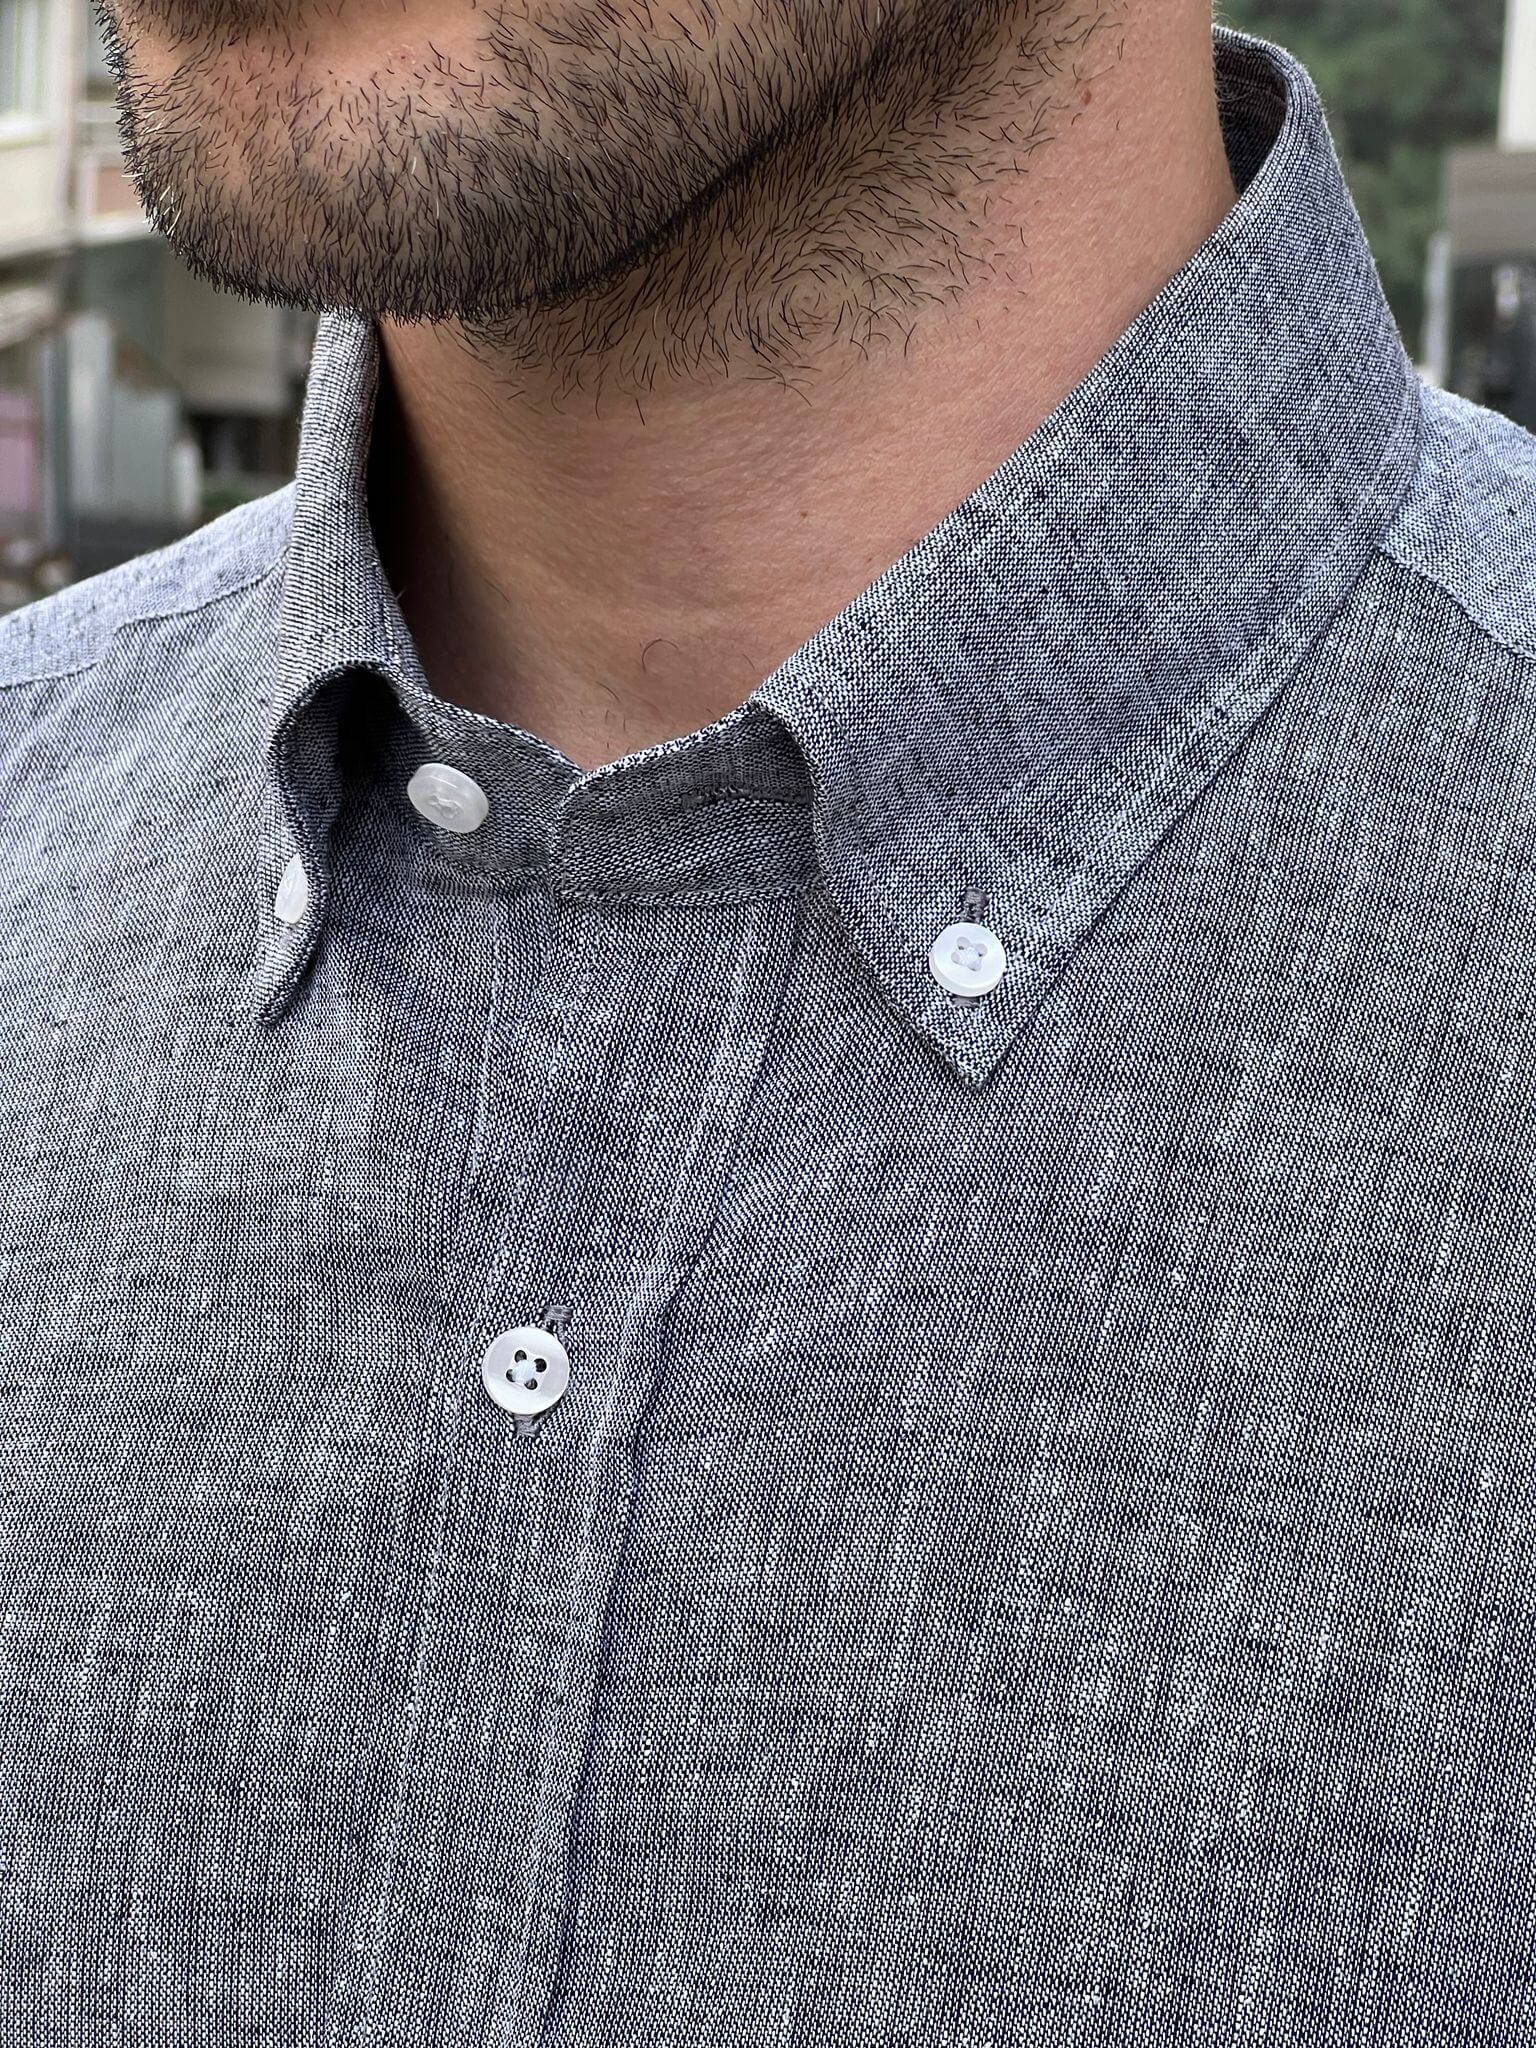 Elegance meets comfort: Our male model effortlessly rocks the Gray Cotton Shirt